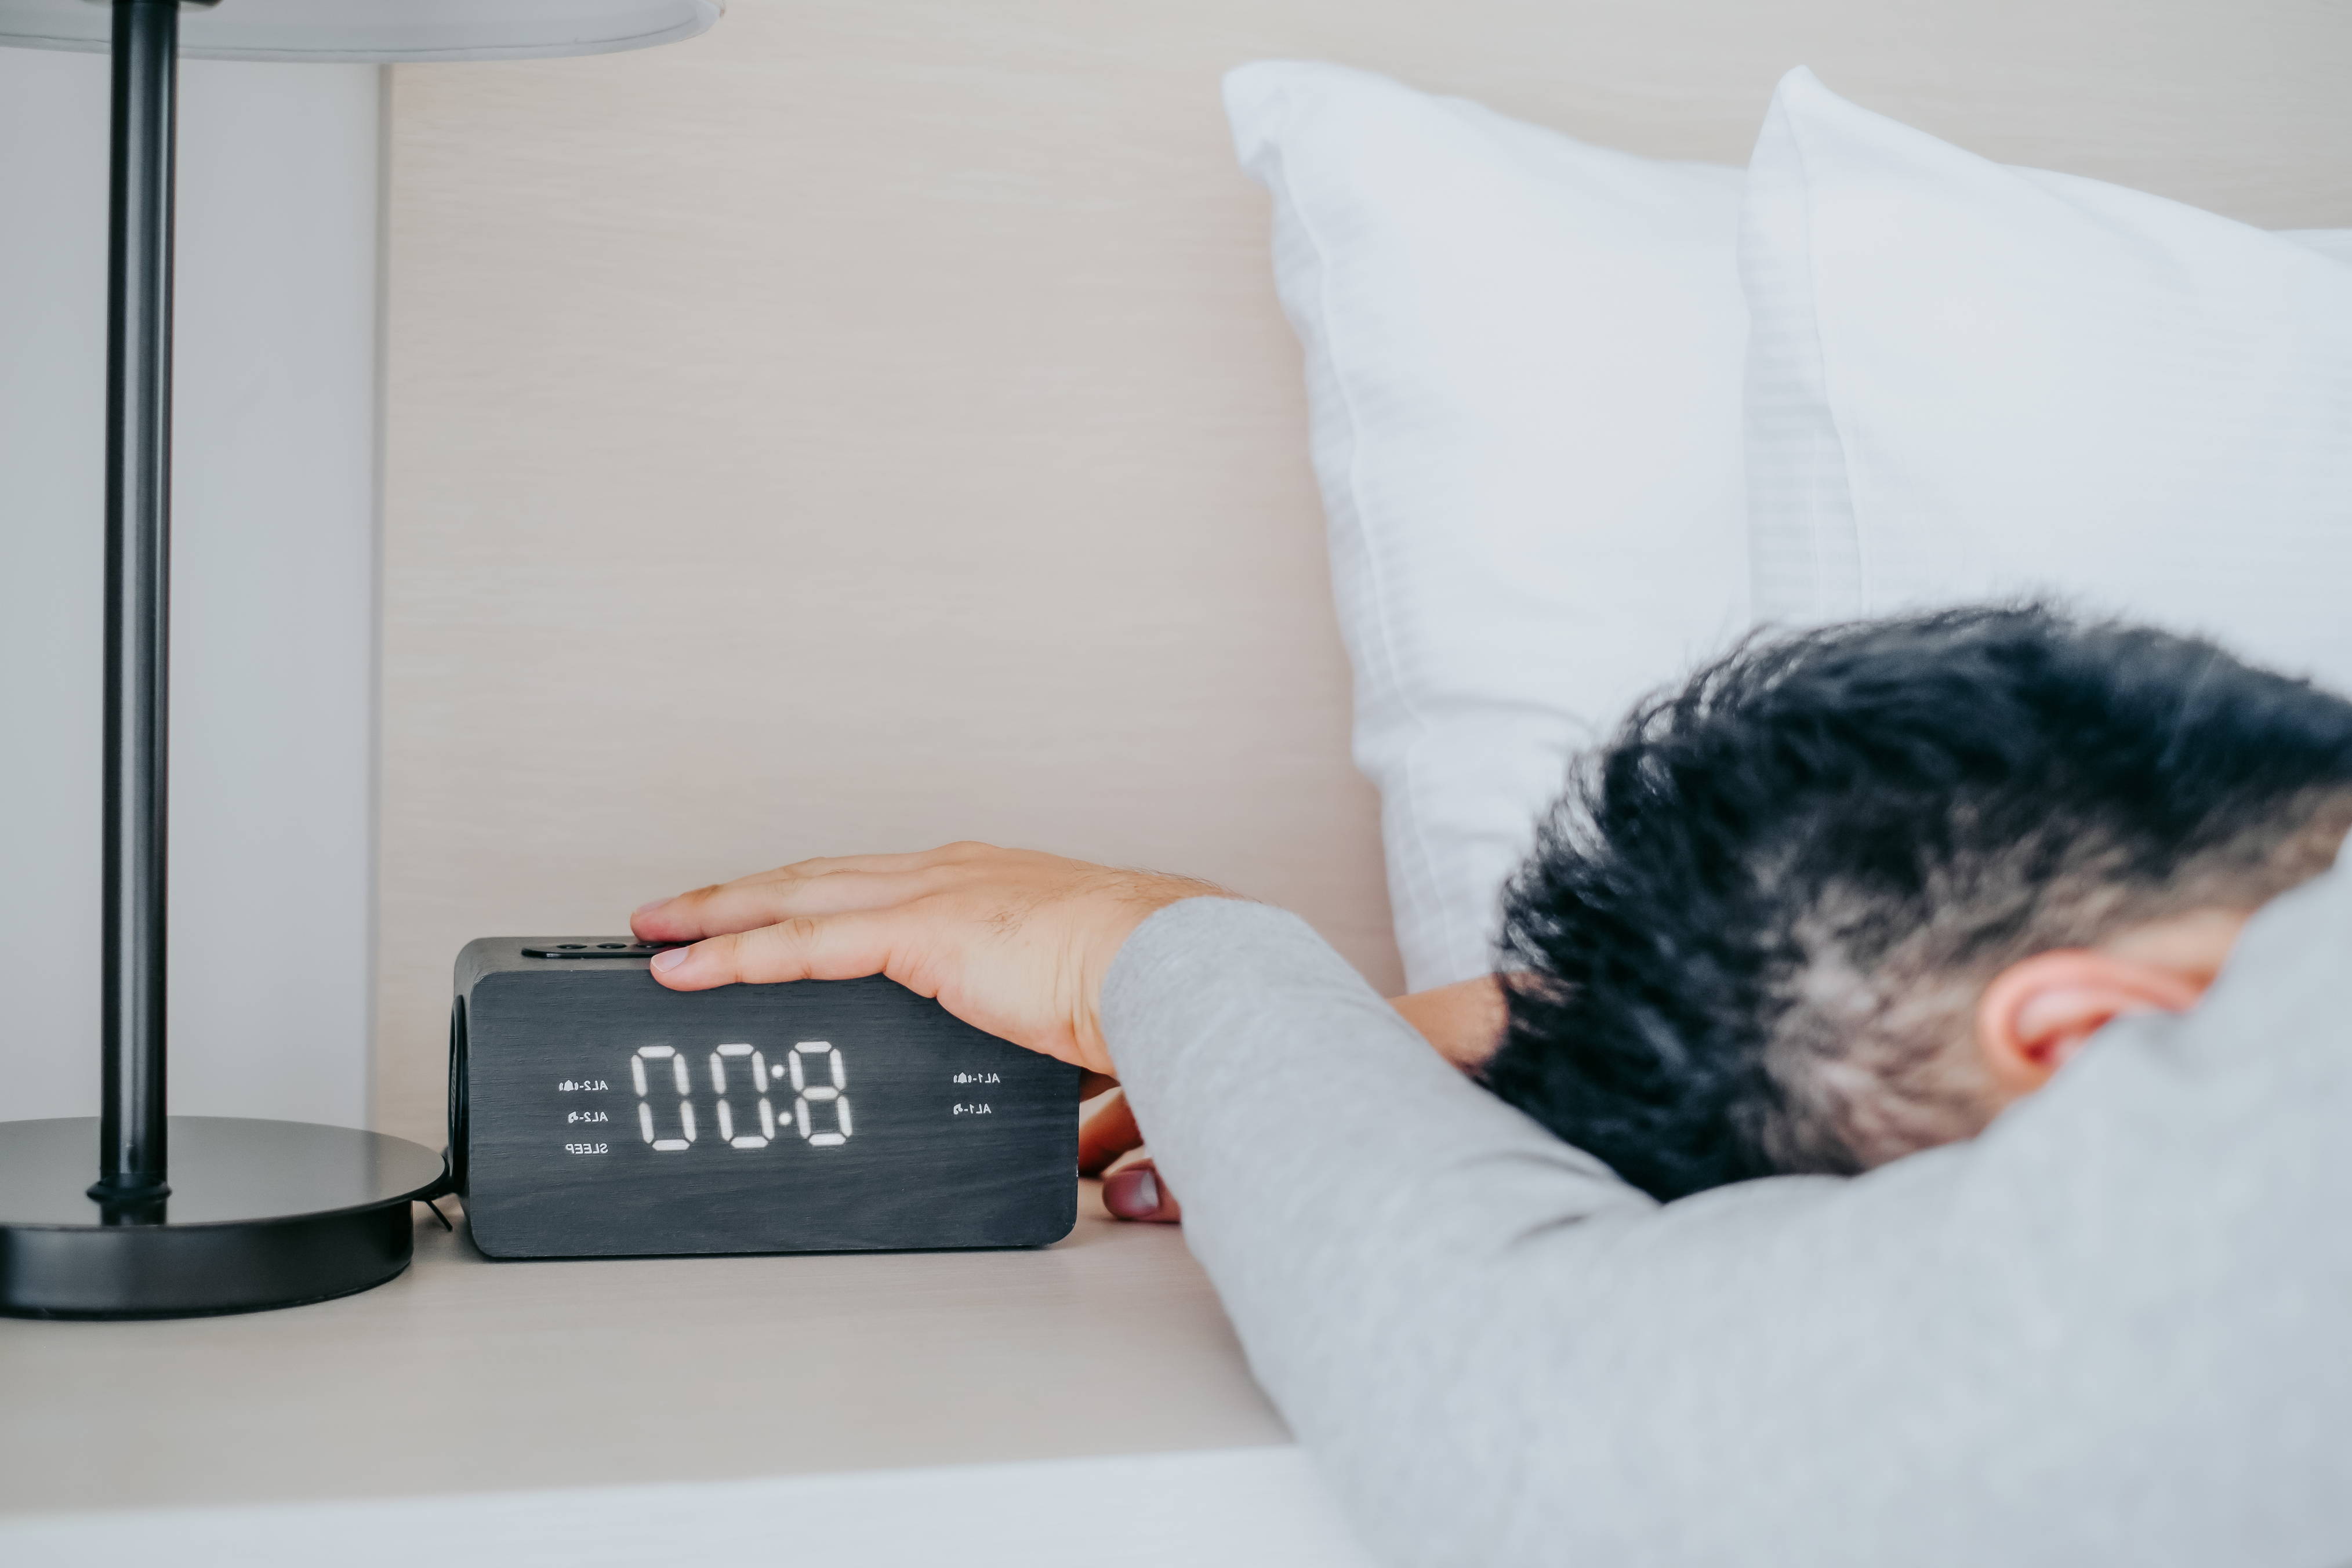 Останови будильник. Будильник утро. Snooze. Будильник далеко от кровати. Man Wake up iphones Alarm Clock.